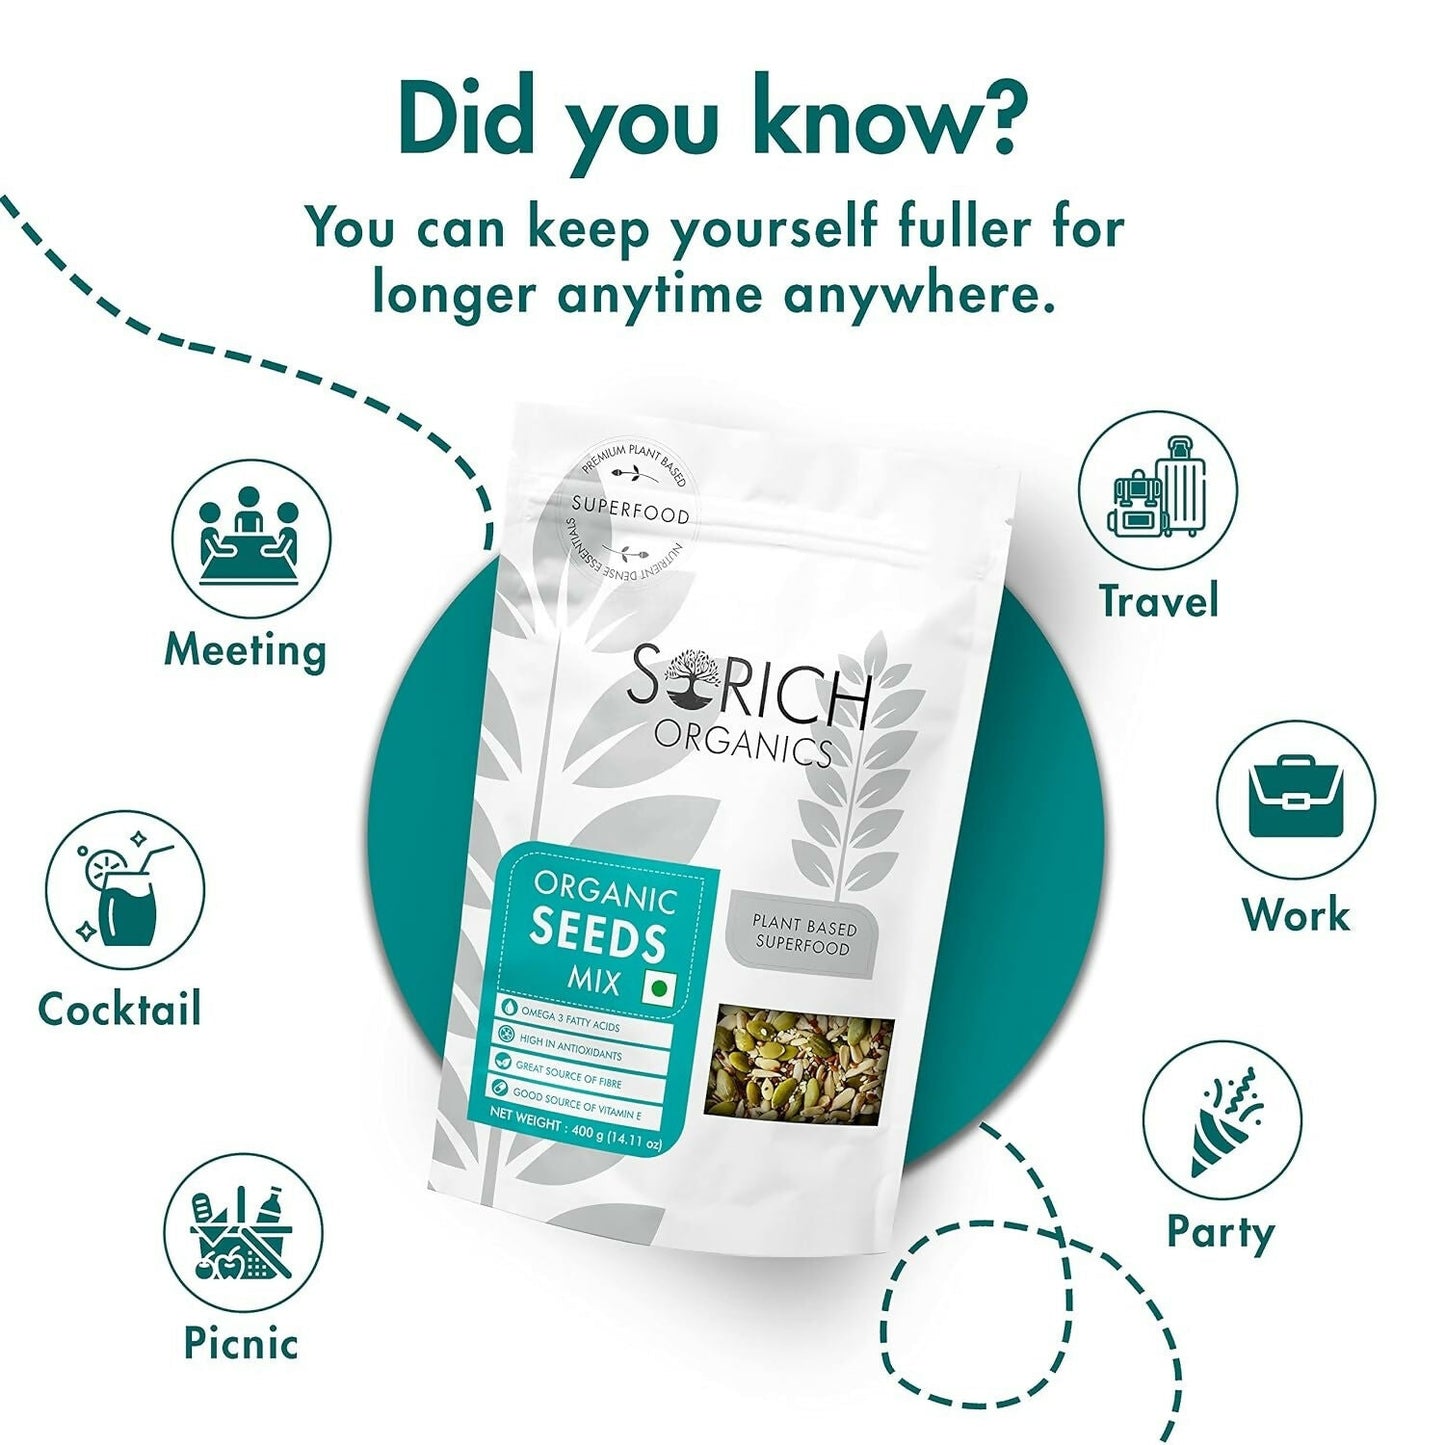 Sorich Organics 6-in-1 Seed Mix